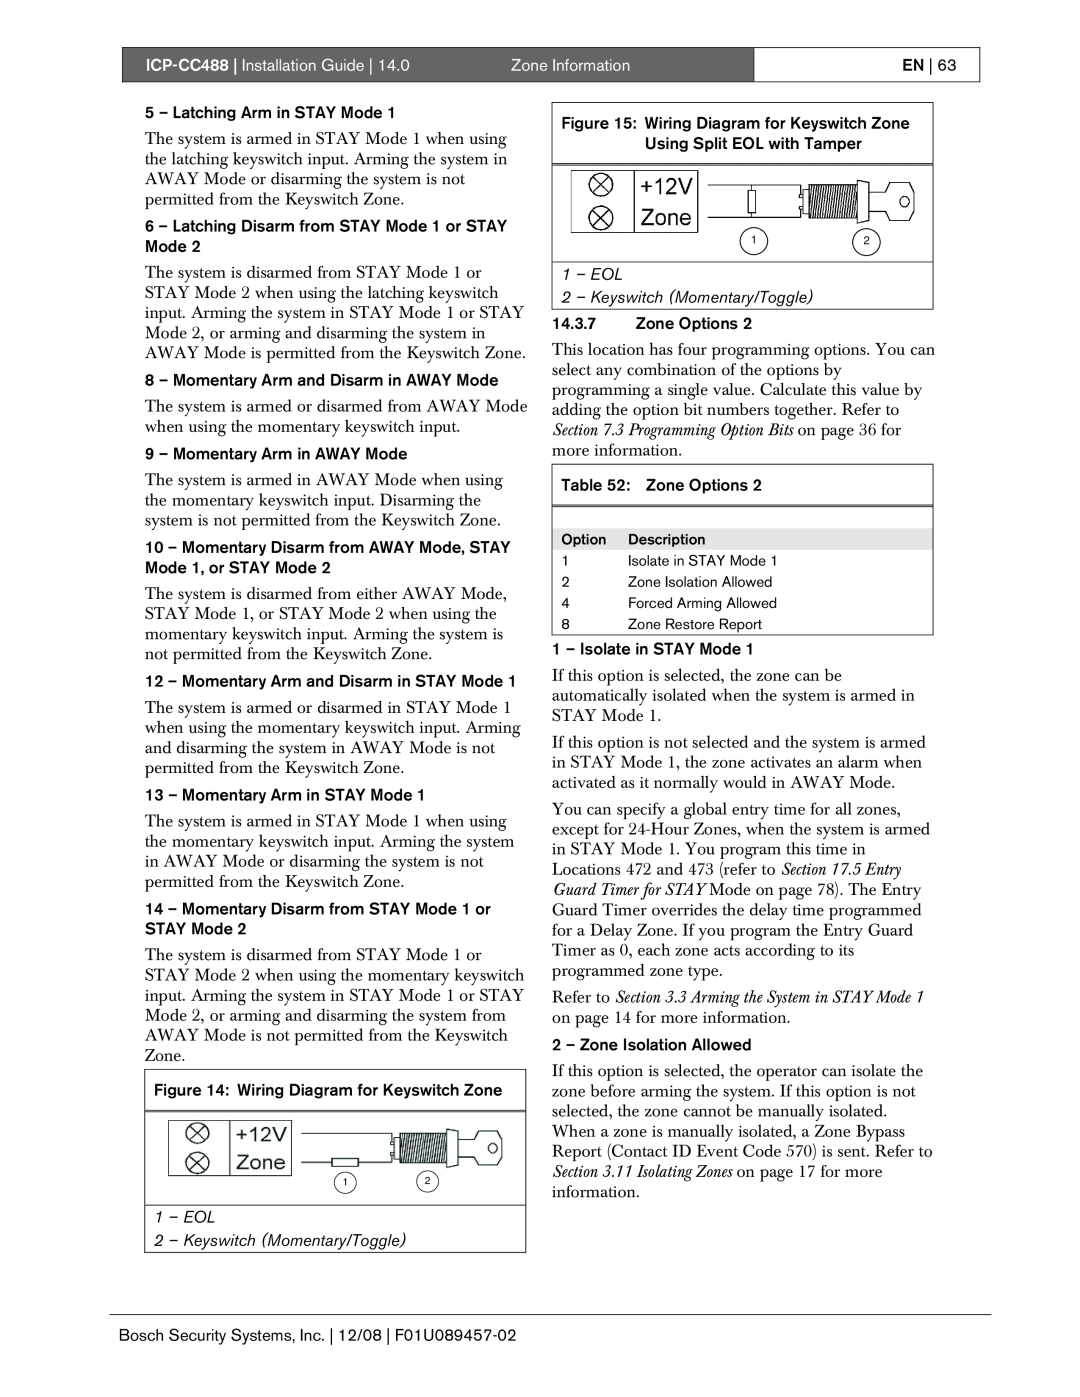 Bosch Appliances manual ICP-CC488| Installation Guide, Zone Information, En 